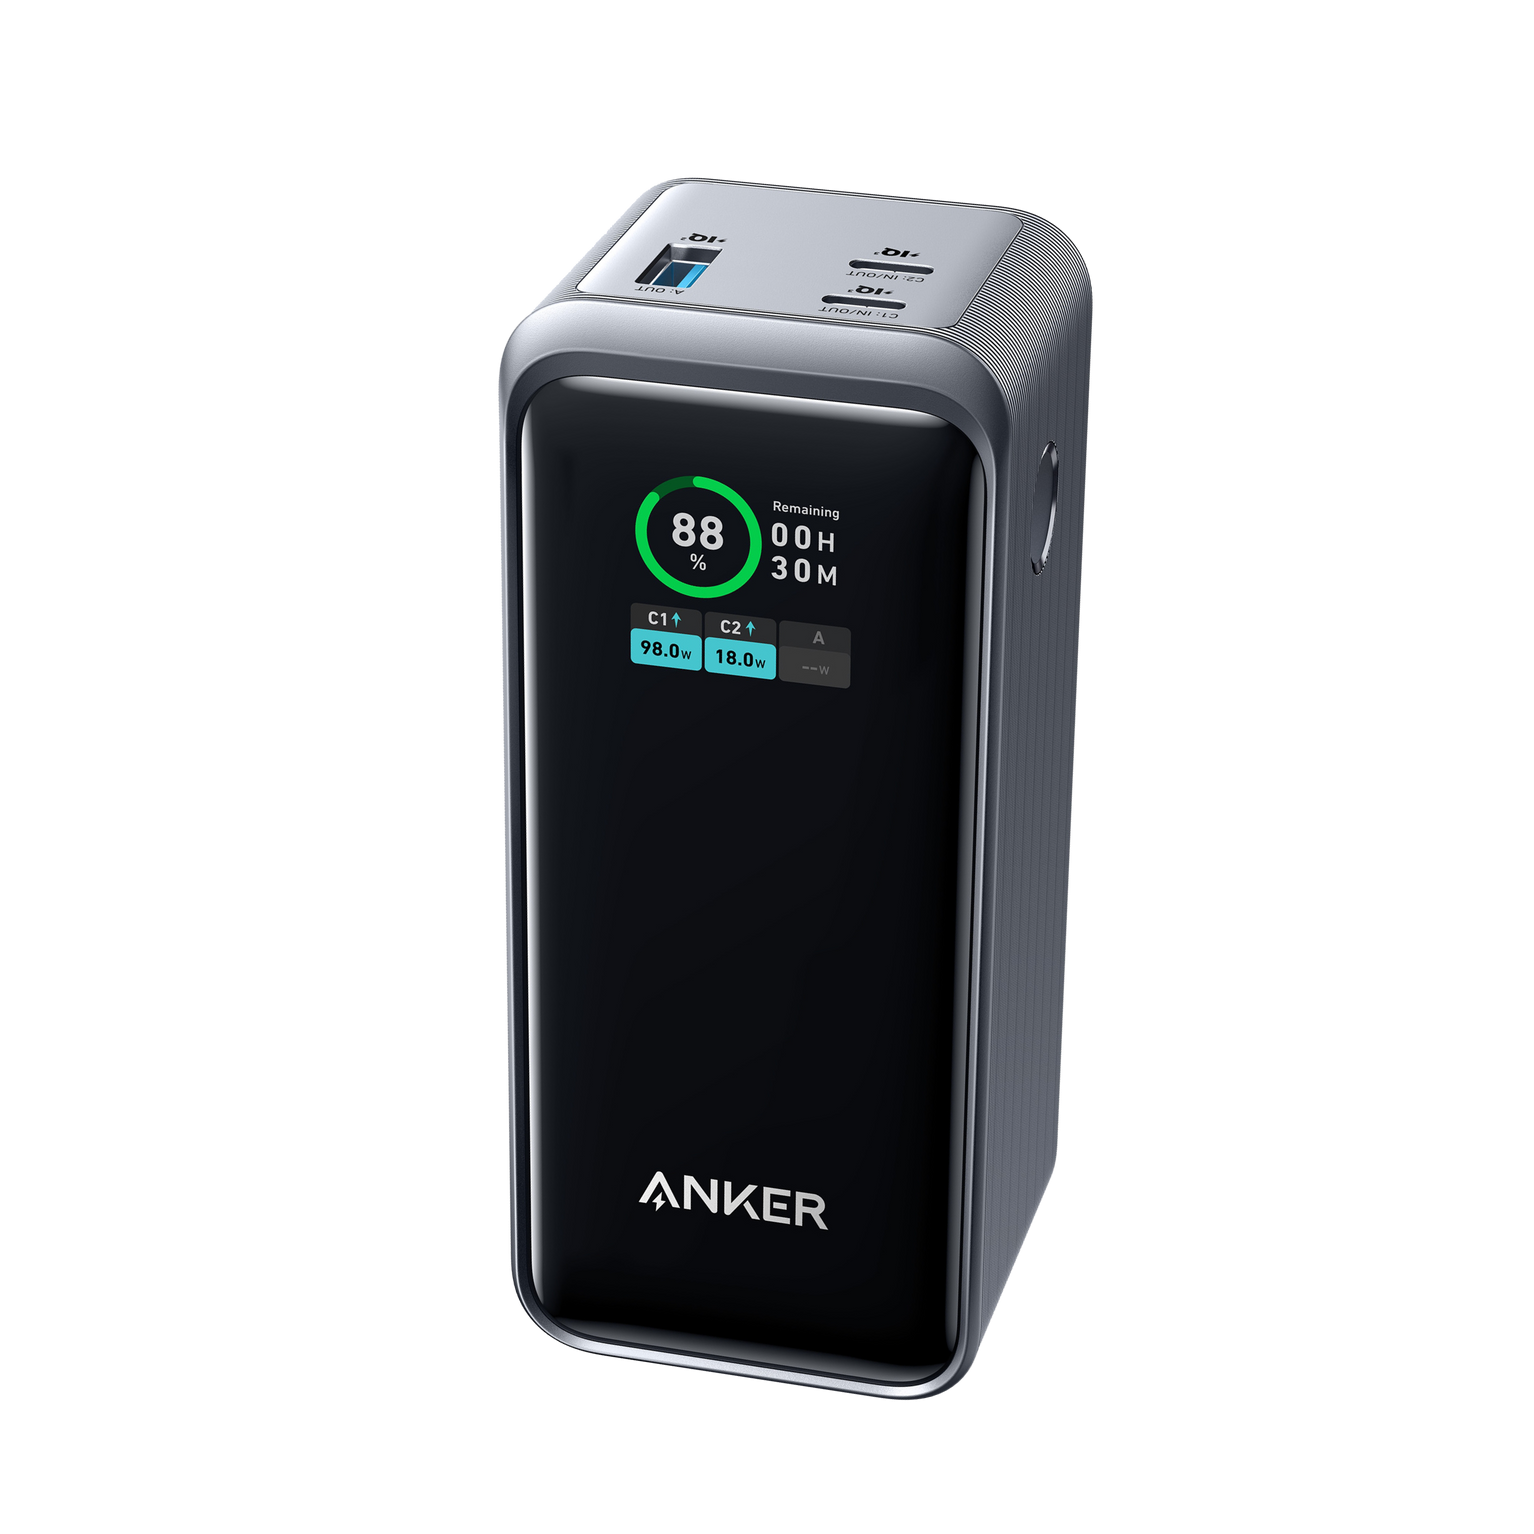 Anker 325 Power Bank (PowerCore 20K) - Anker US